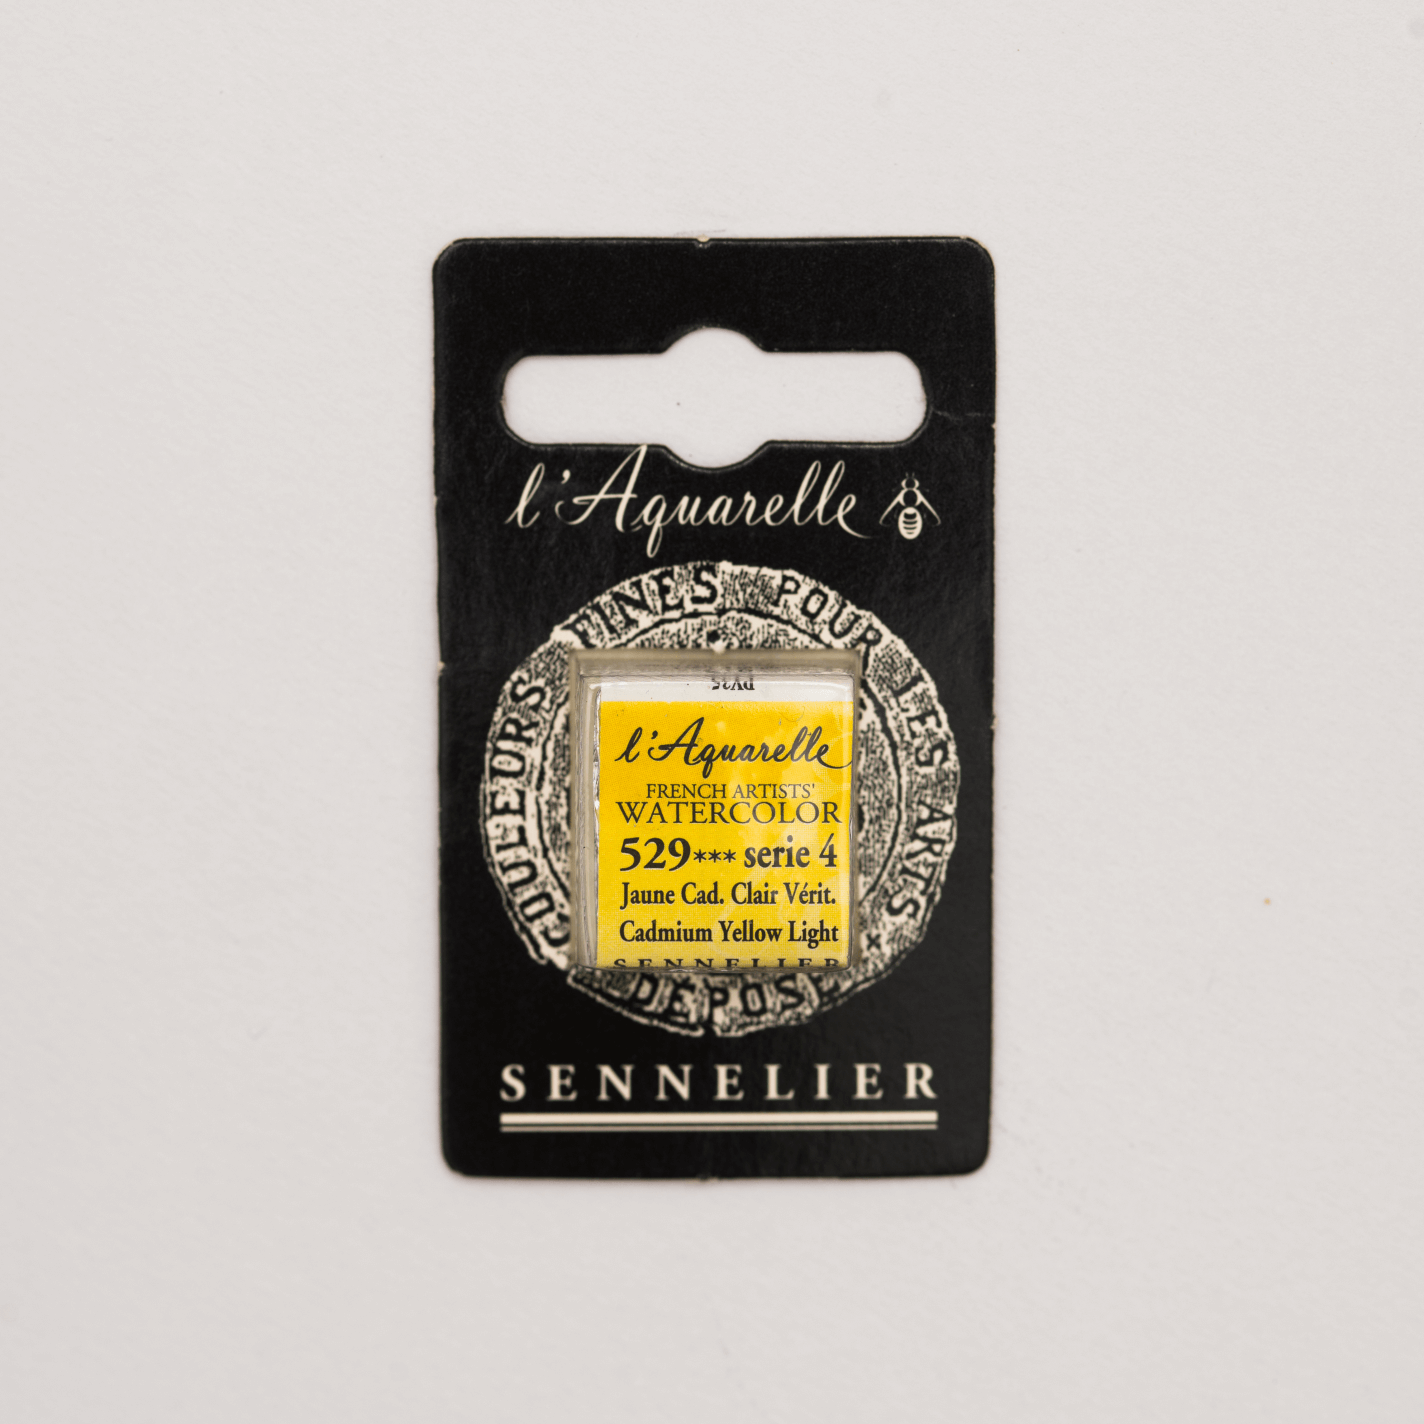 Sennelier Aquarelle pans 1/2 pan Cadmium Yellow Light